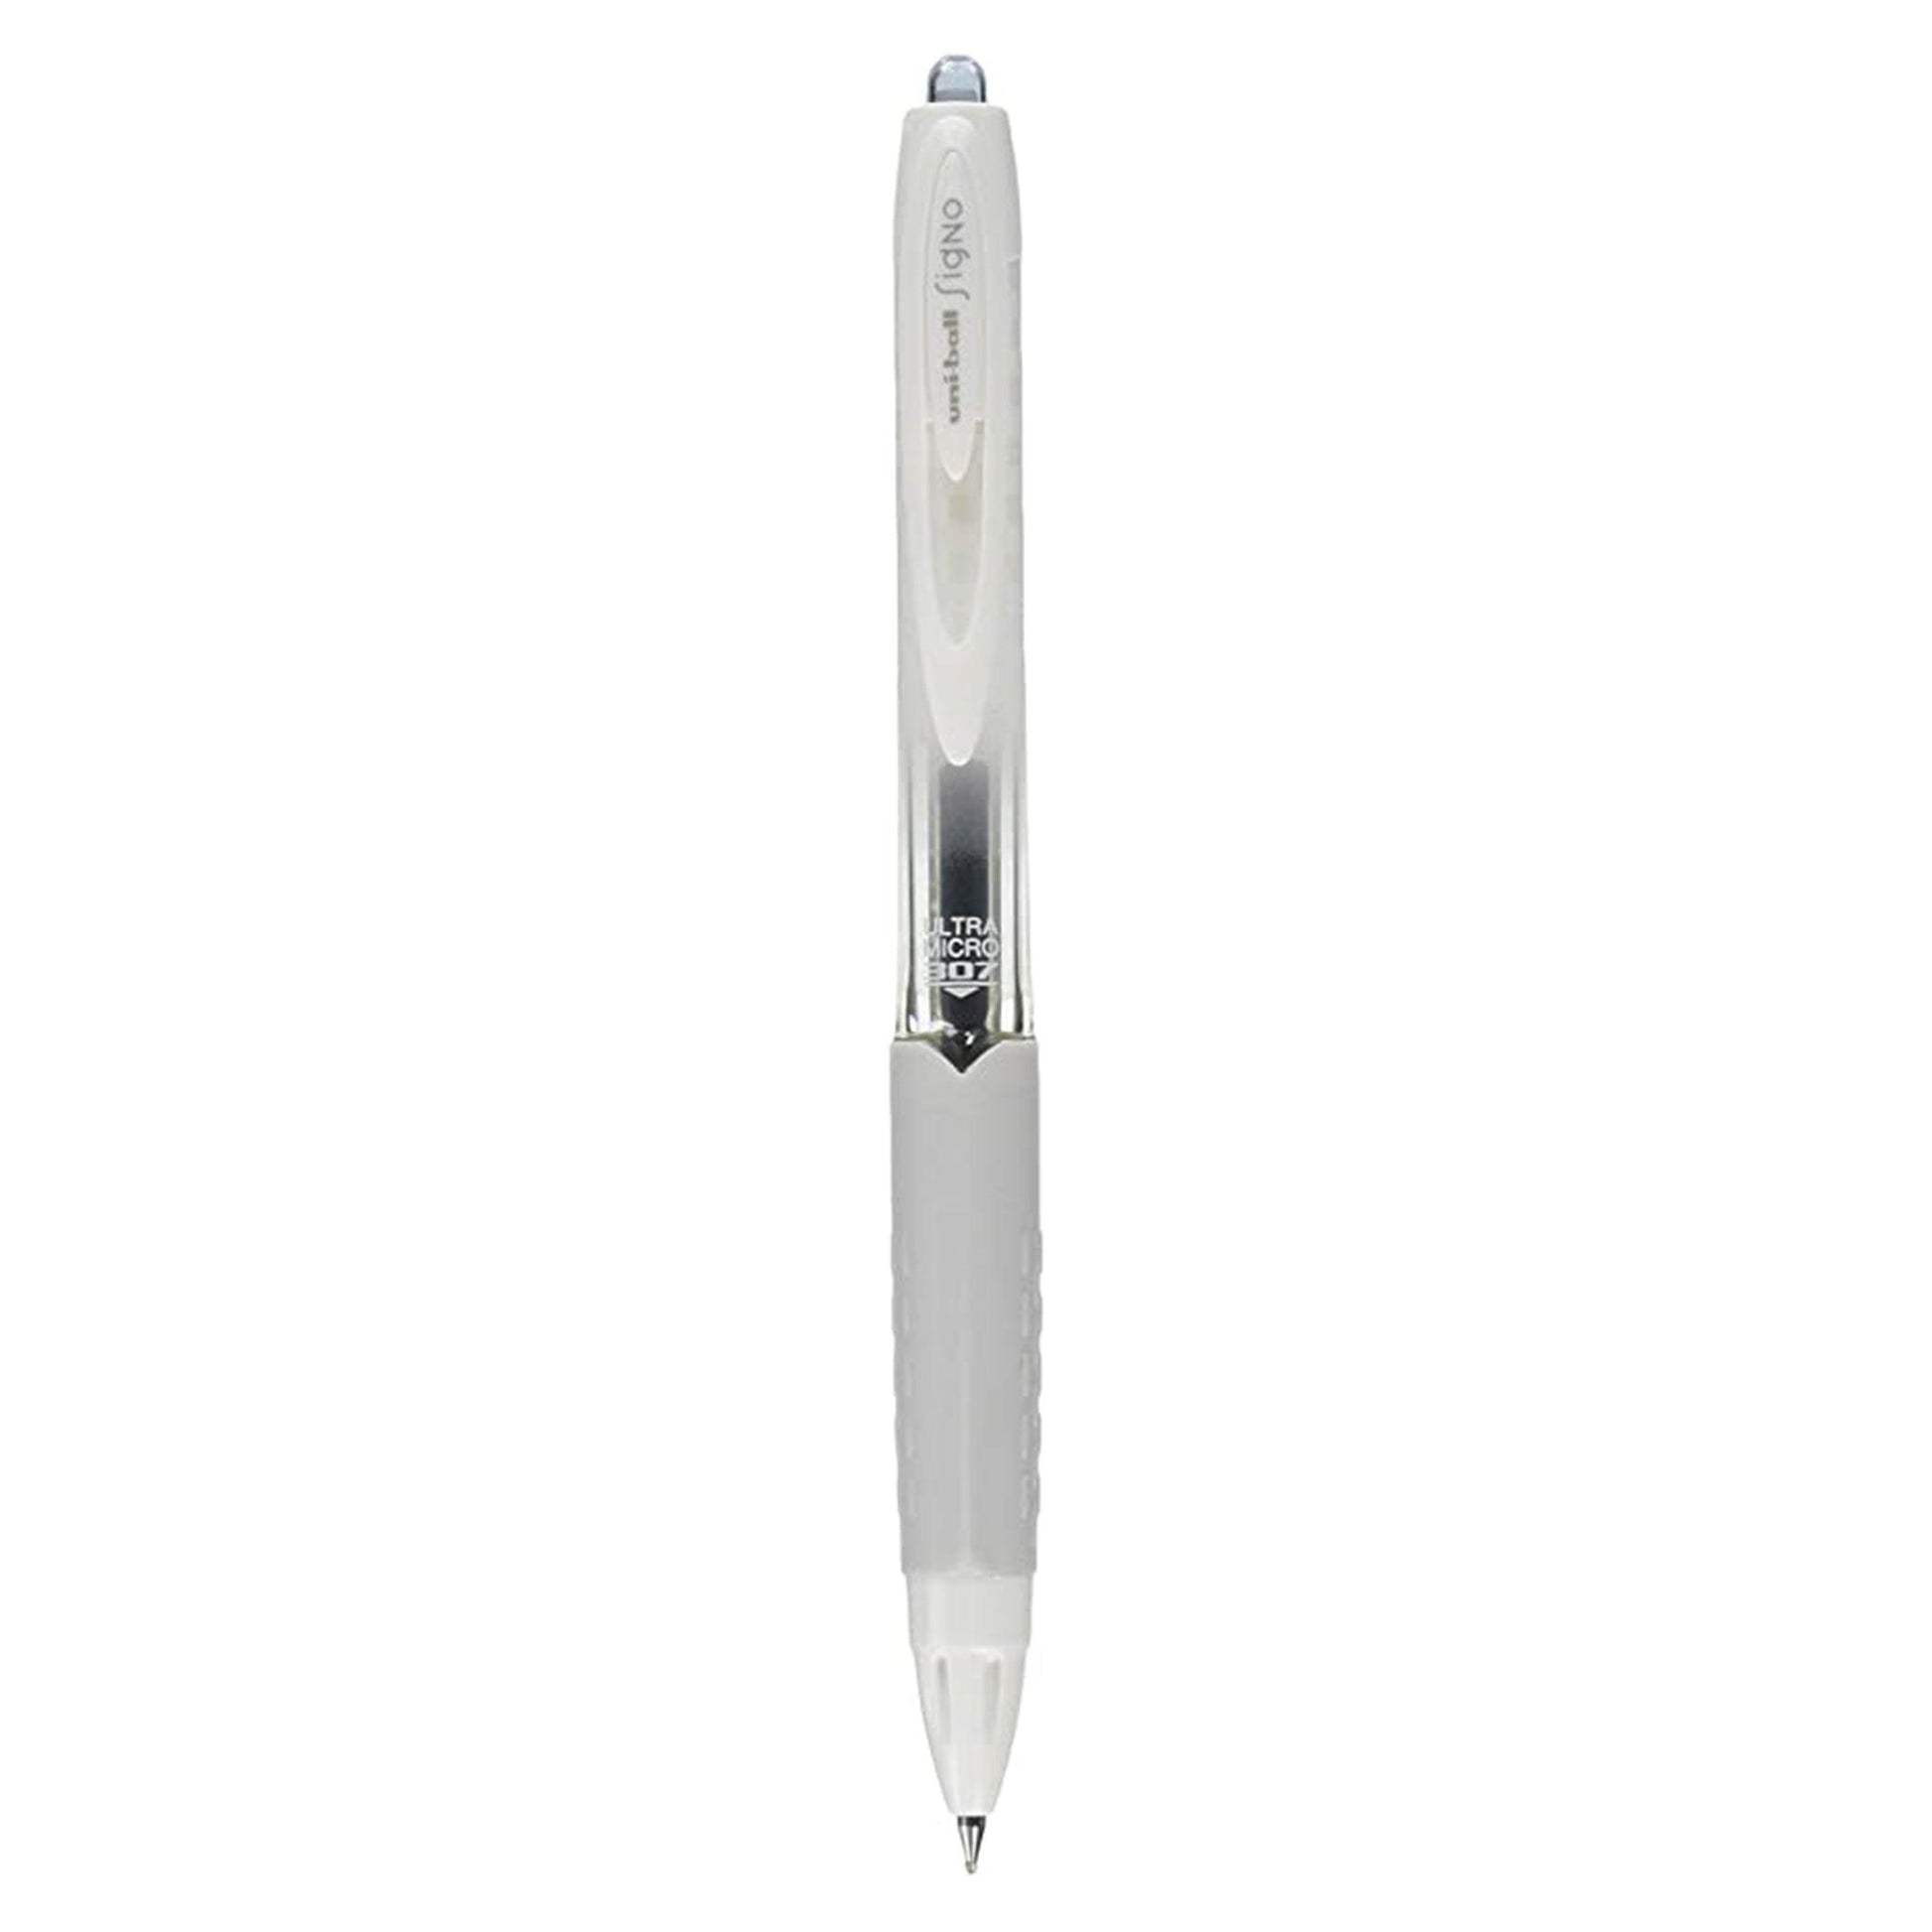 Waterproof Gel Pen - Smooth Writing, Quick Drying, High Water